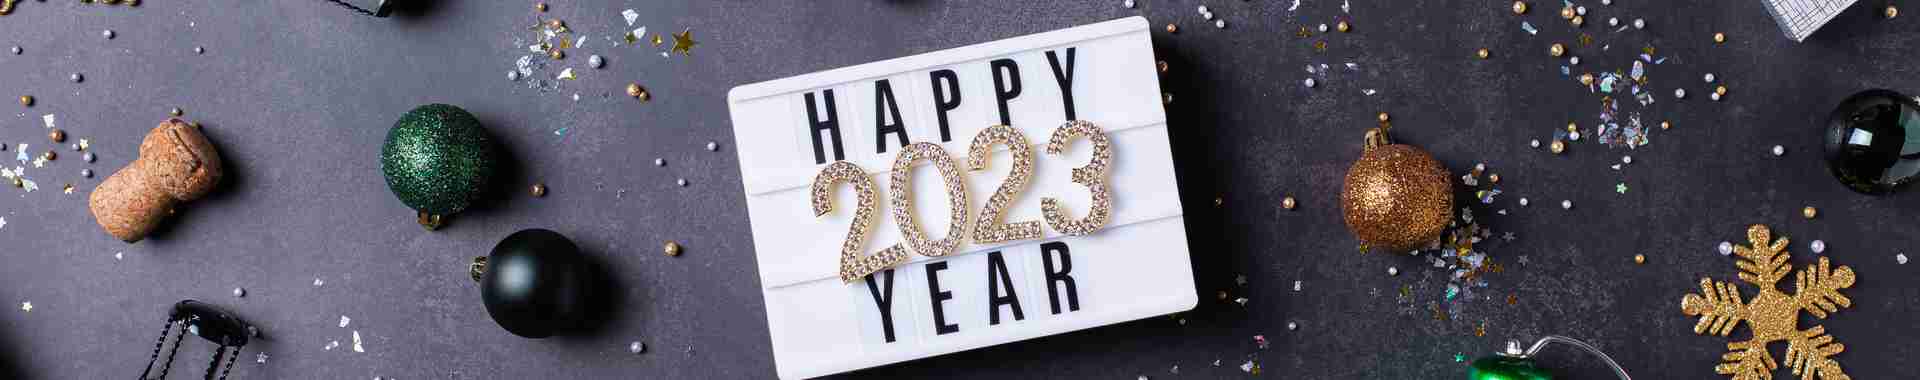 happy-new-year-greeting-card-2023-with-champagne-2022-10-17-22-44-20-utc.jpg